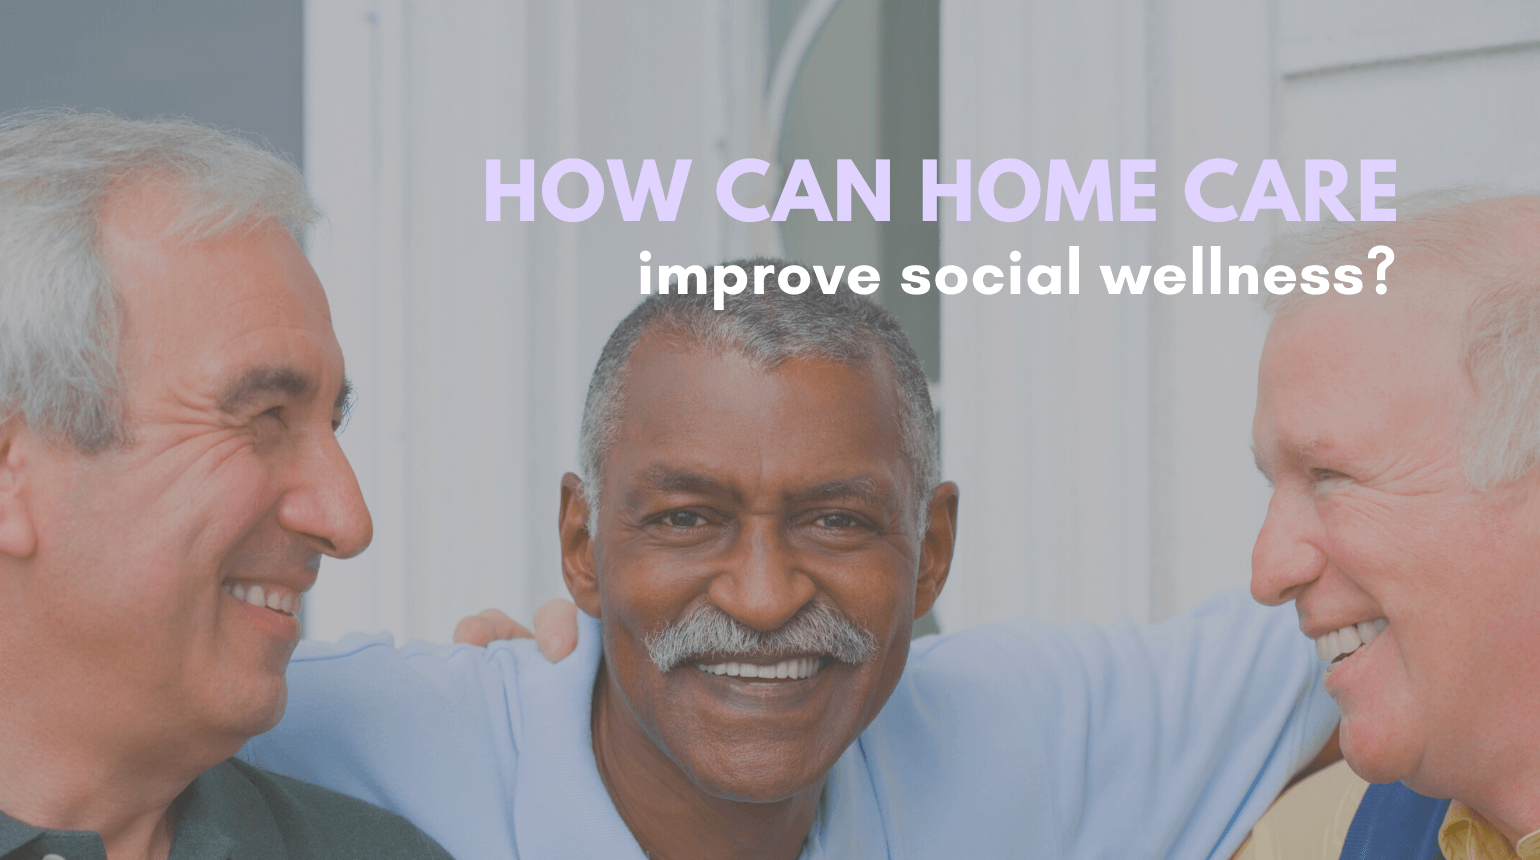 Home Care Can Improve Social Wellness